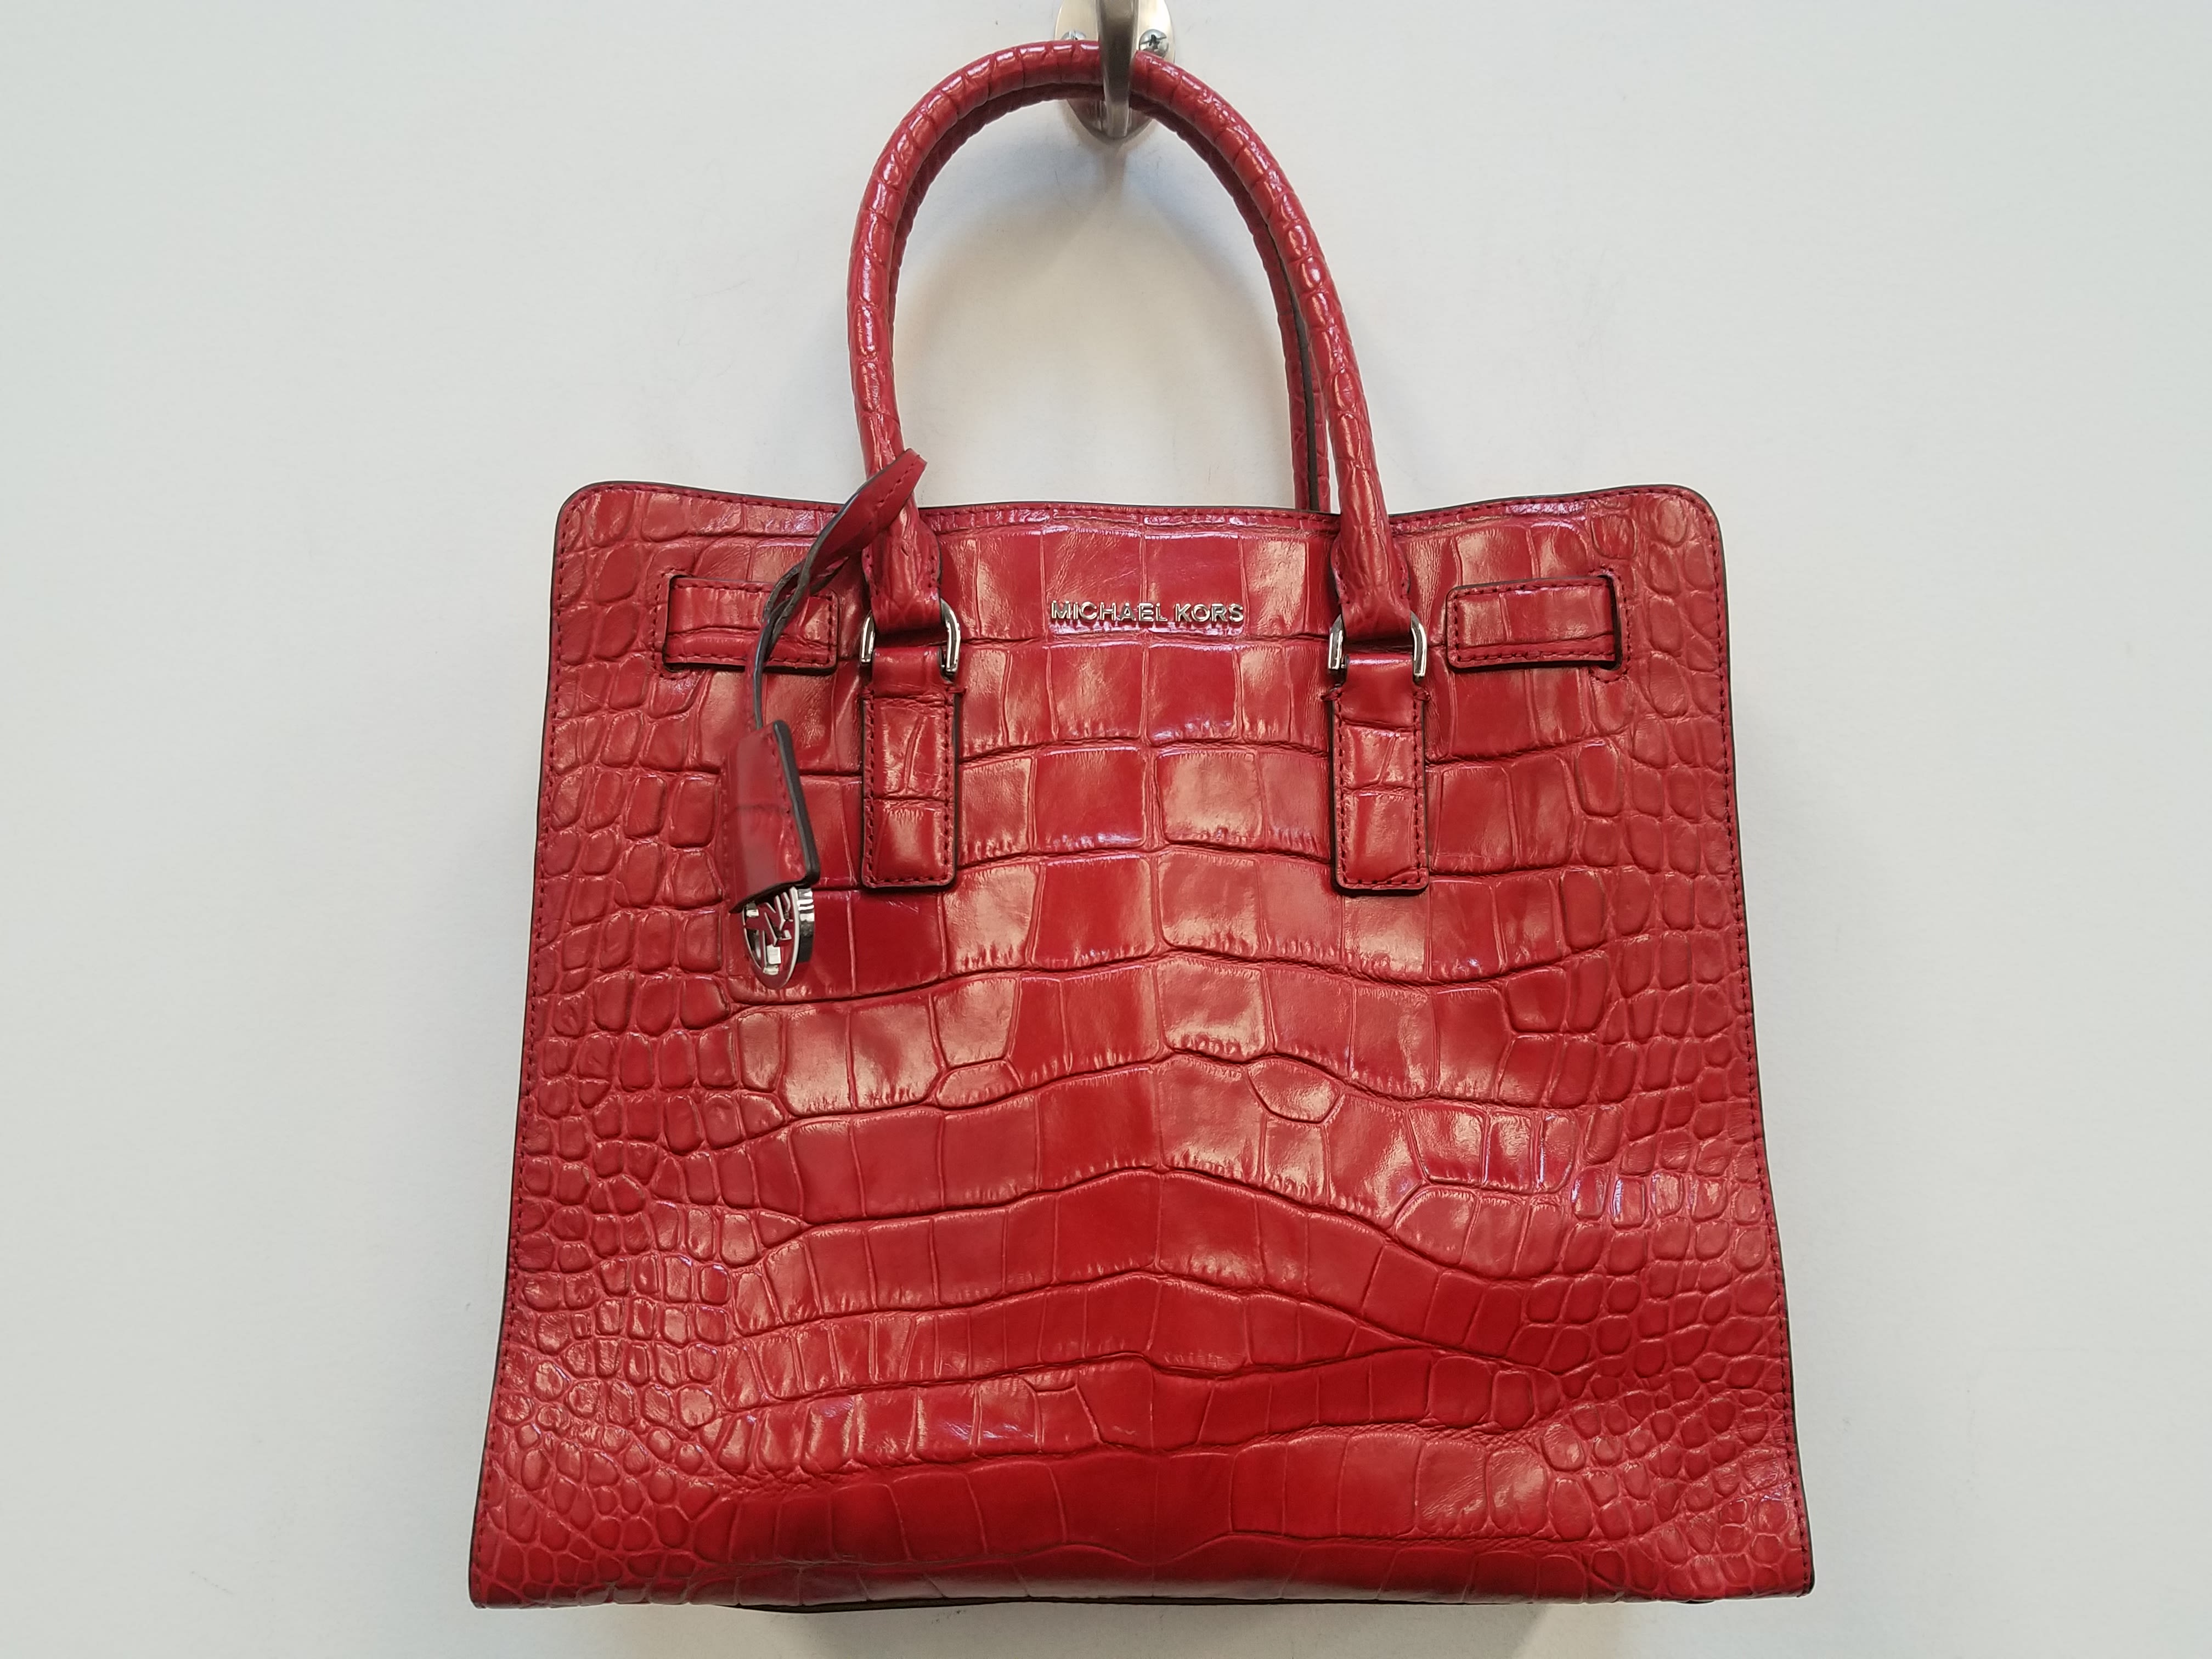  Michael Kors - Reds / Women's Tote Handbags / Women's